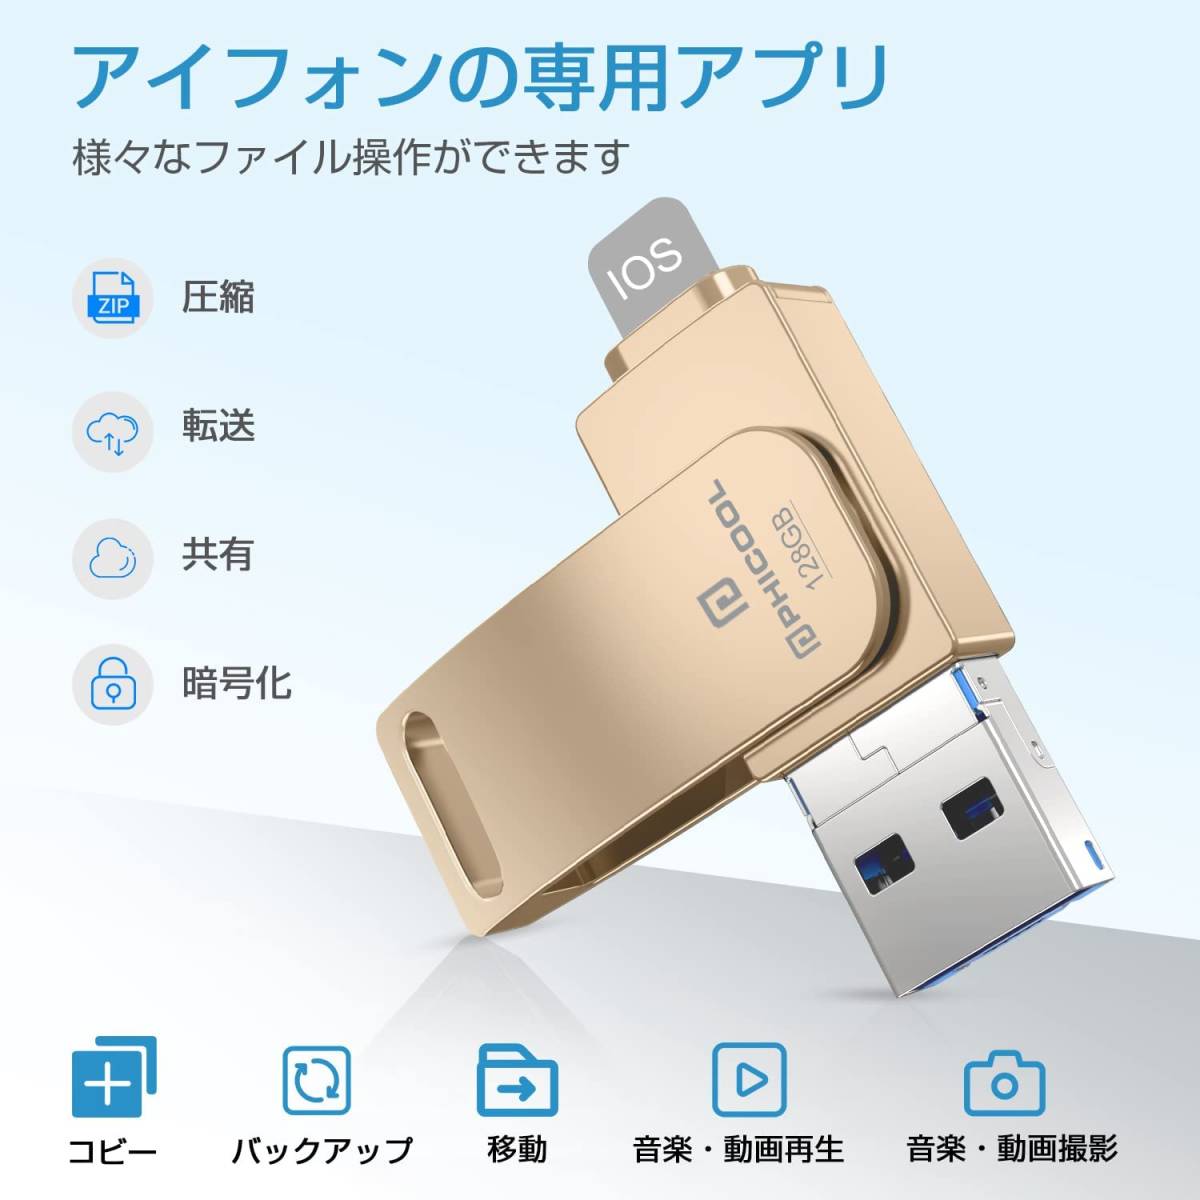 USBメモリ ４in1 高速 USB3.0 usb メモリー 128GB USB/Type-C/micro usb フラッシュドライブ パスワード保護 小型 回転式 亜鉛合金ボディ